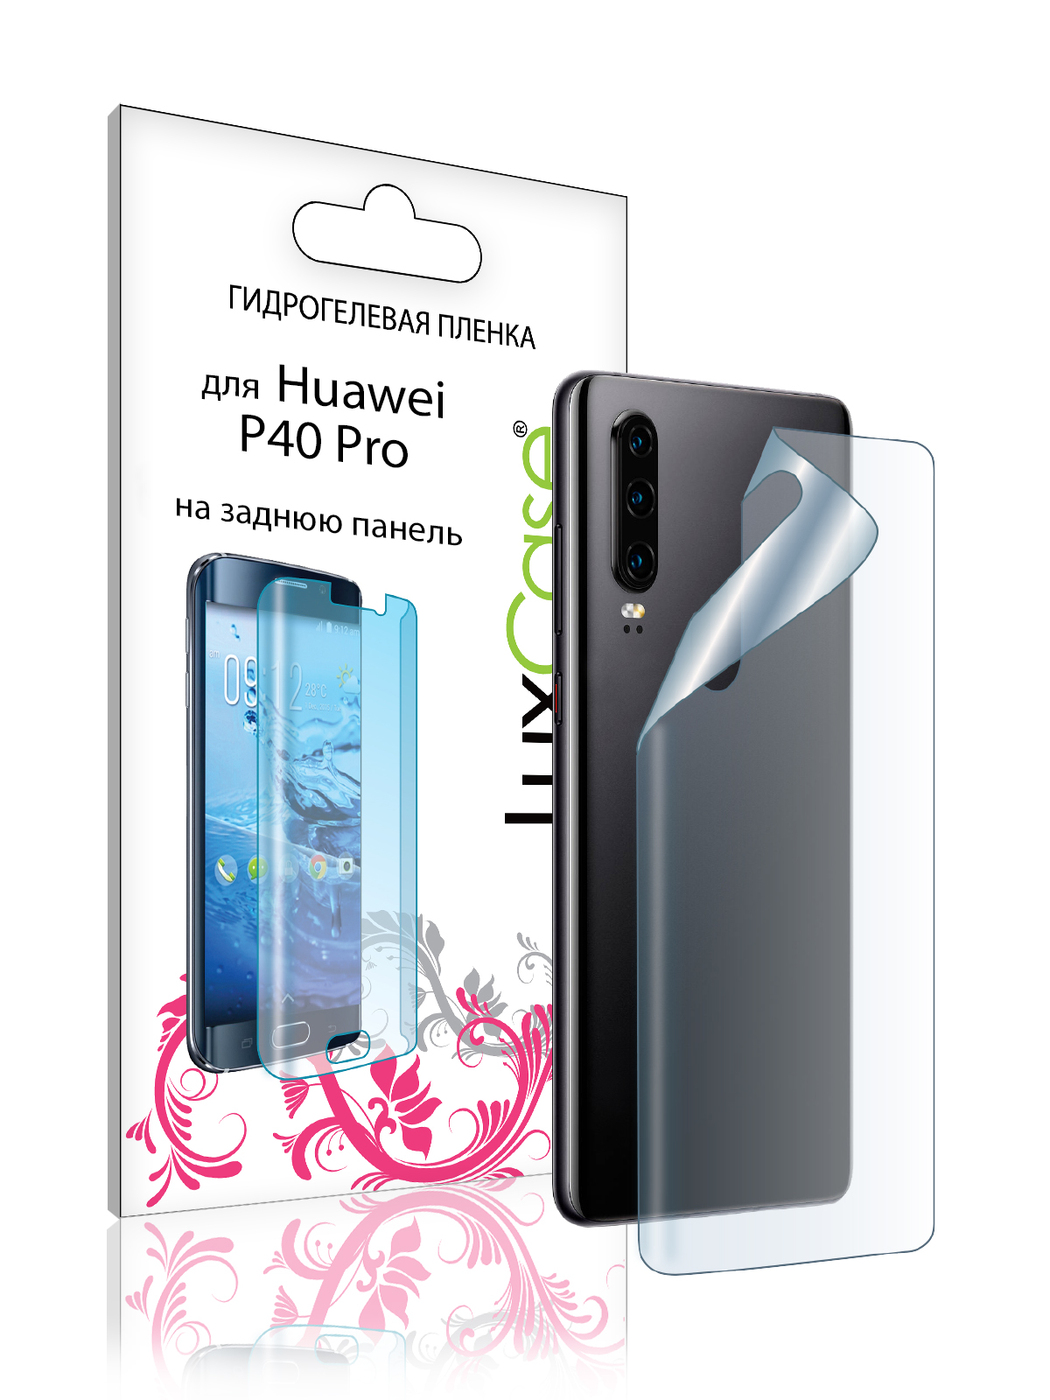 Защита задней крышки LuxCase для Huawei P40 Pro пленка 0.14mm Transparent 86125 защитная пленка luxcase для huawei p40 pro back 0 14mm transparent 86125